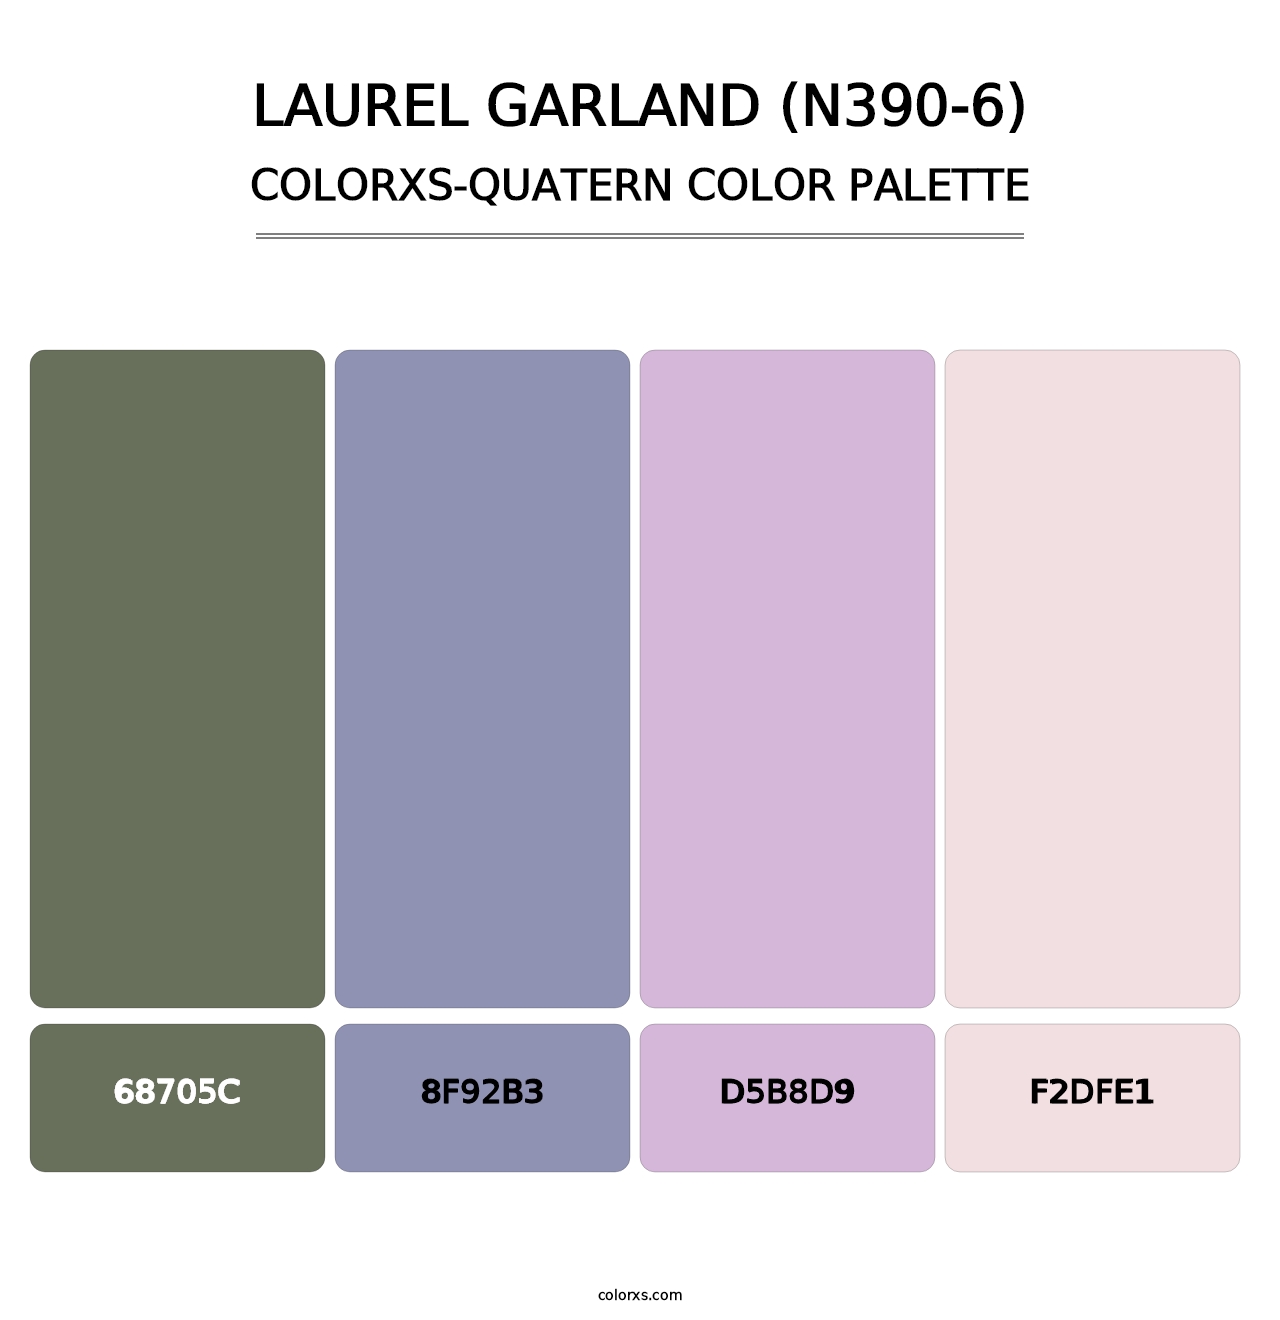 Laurel Garland (N390-6) - Colorxs Quatern Palette